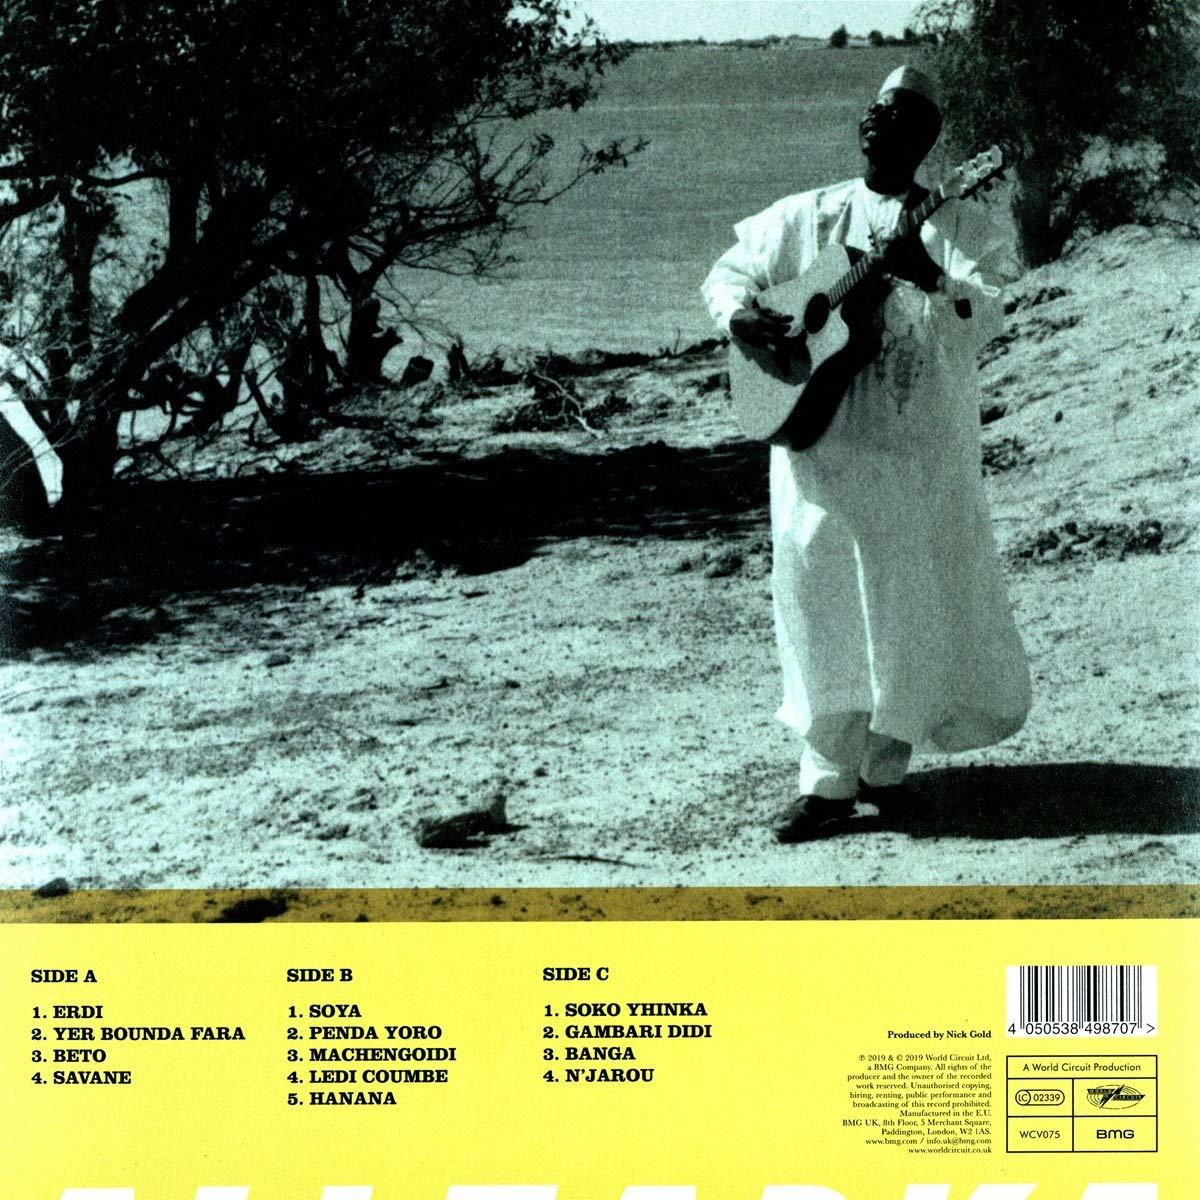 Ali Farka - - SAVANE (Vinyl) -REMAST- Touré